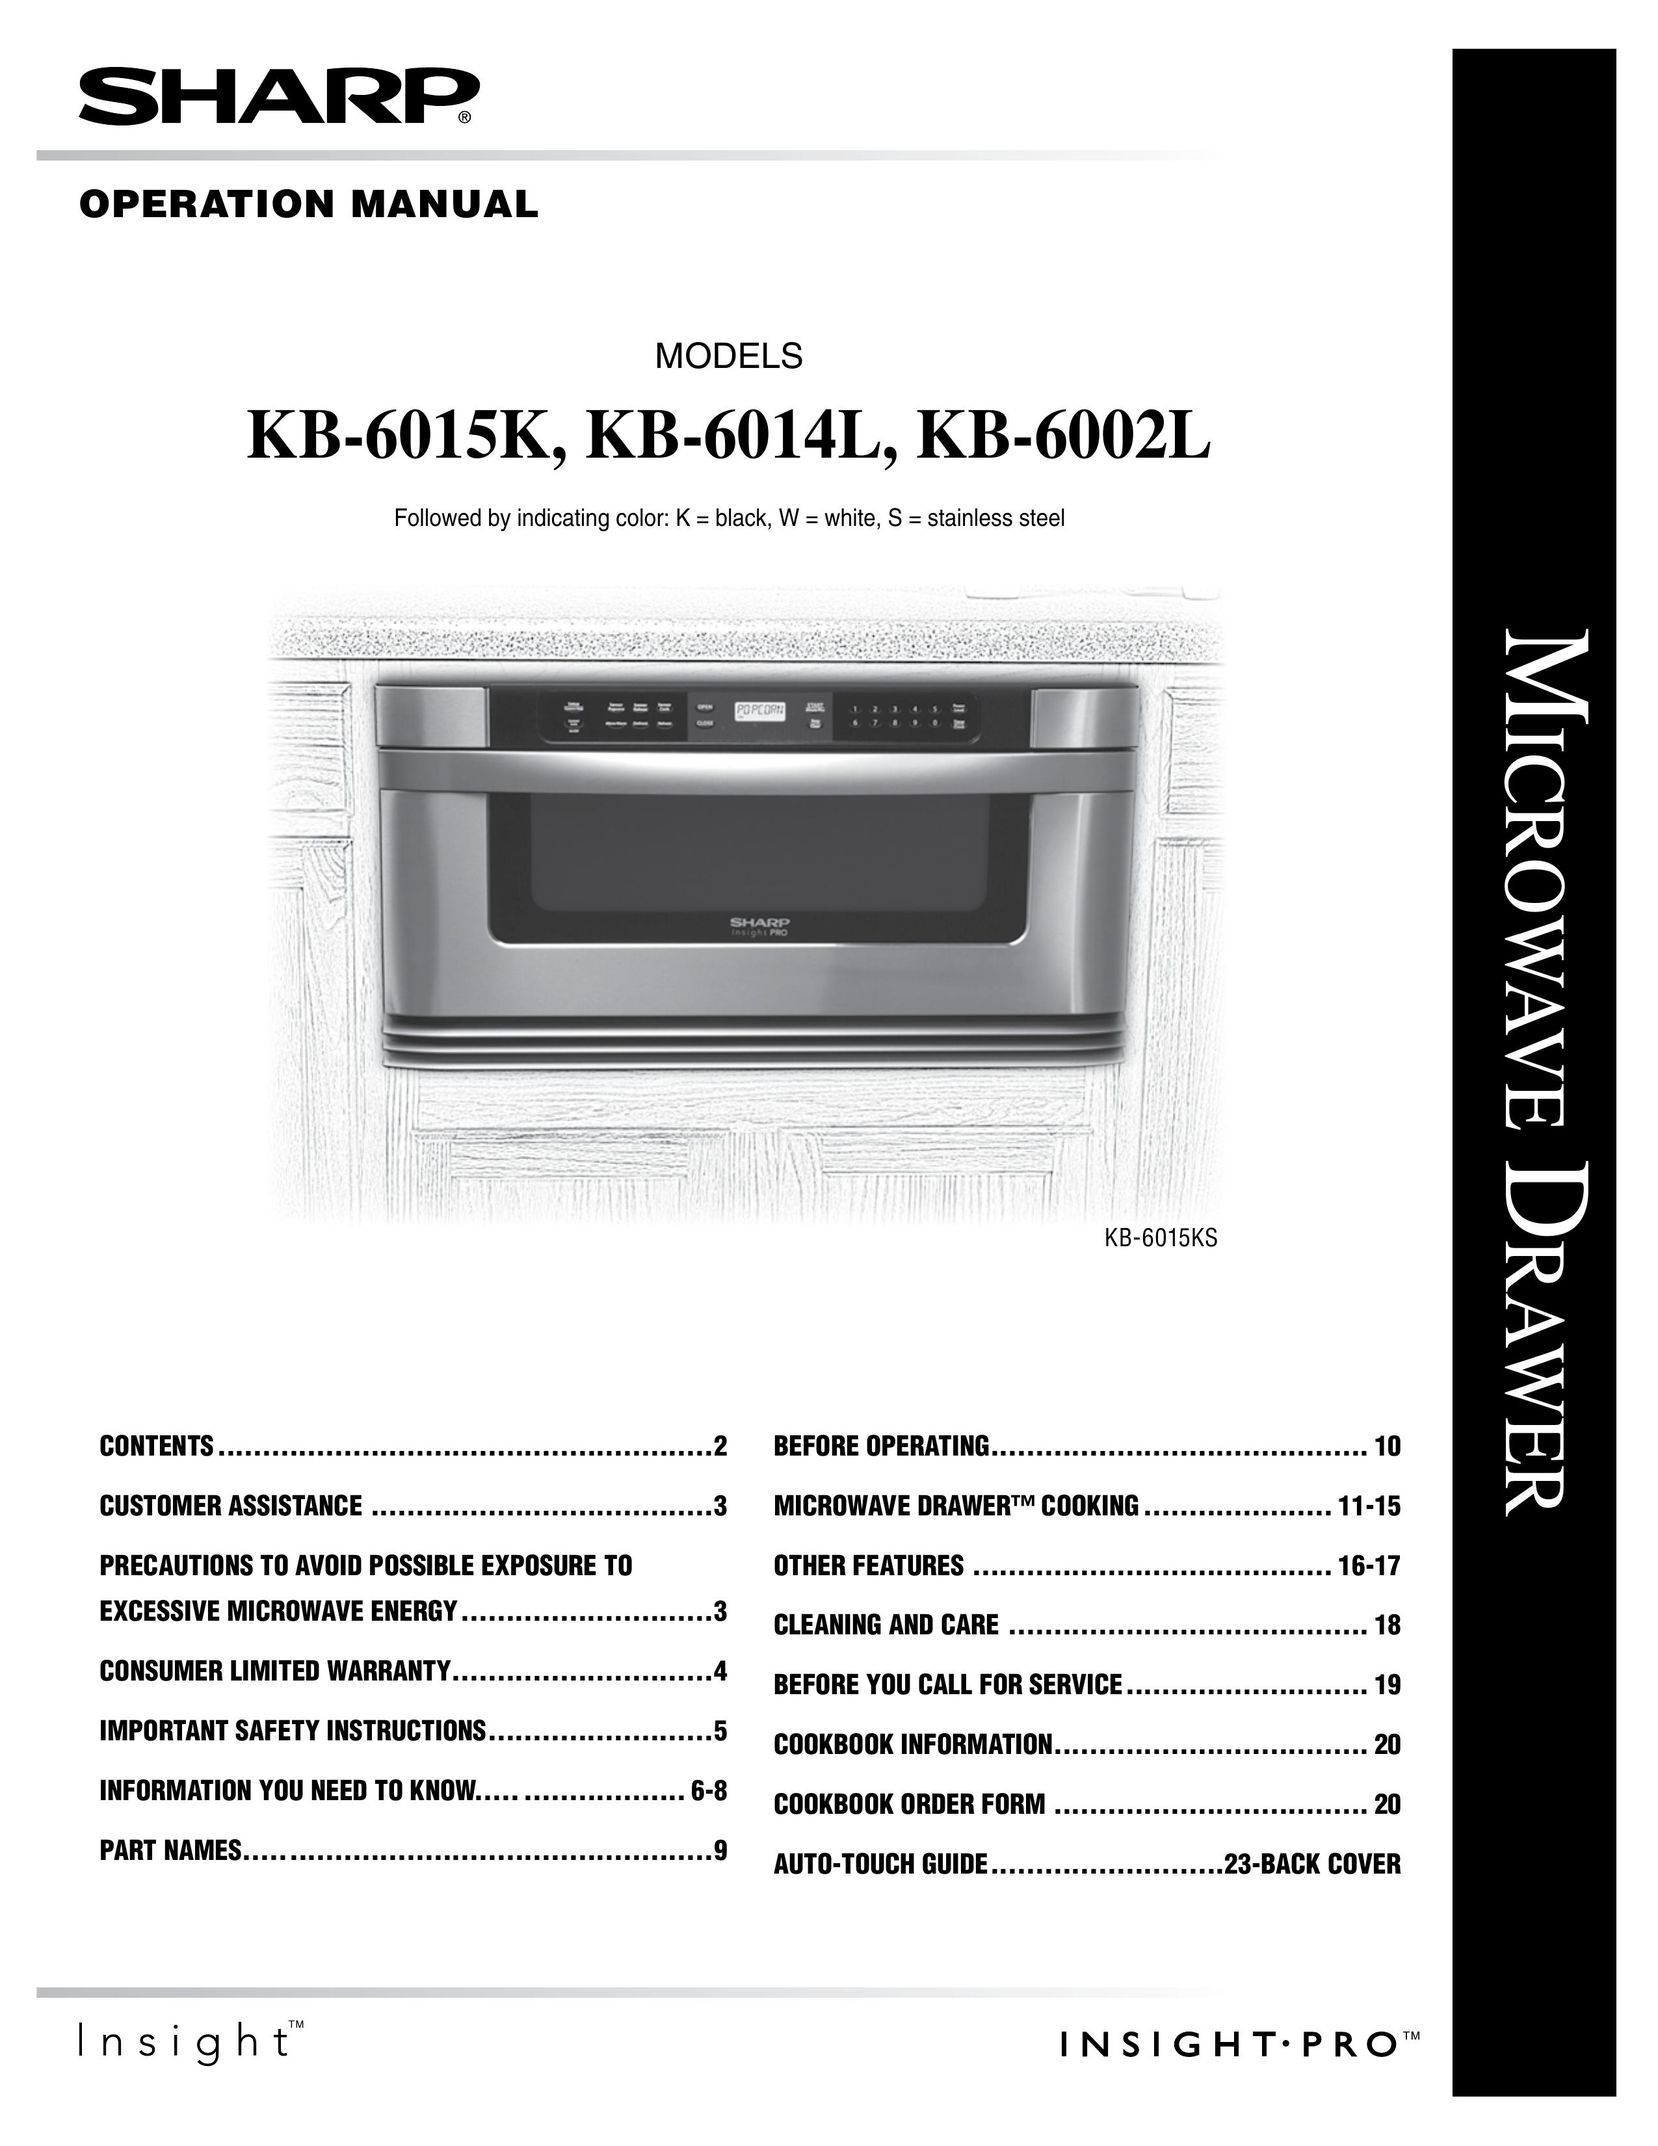 Sharp KB-6002L Microwave Oven User Manual